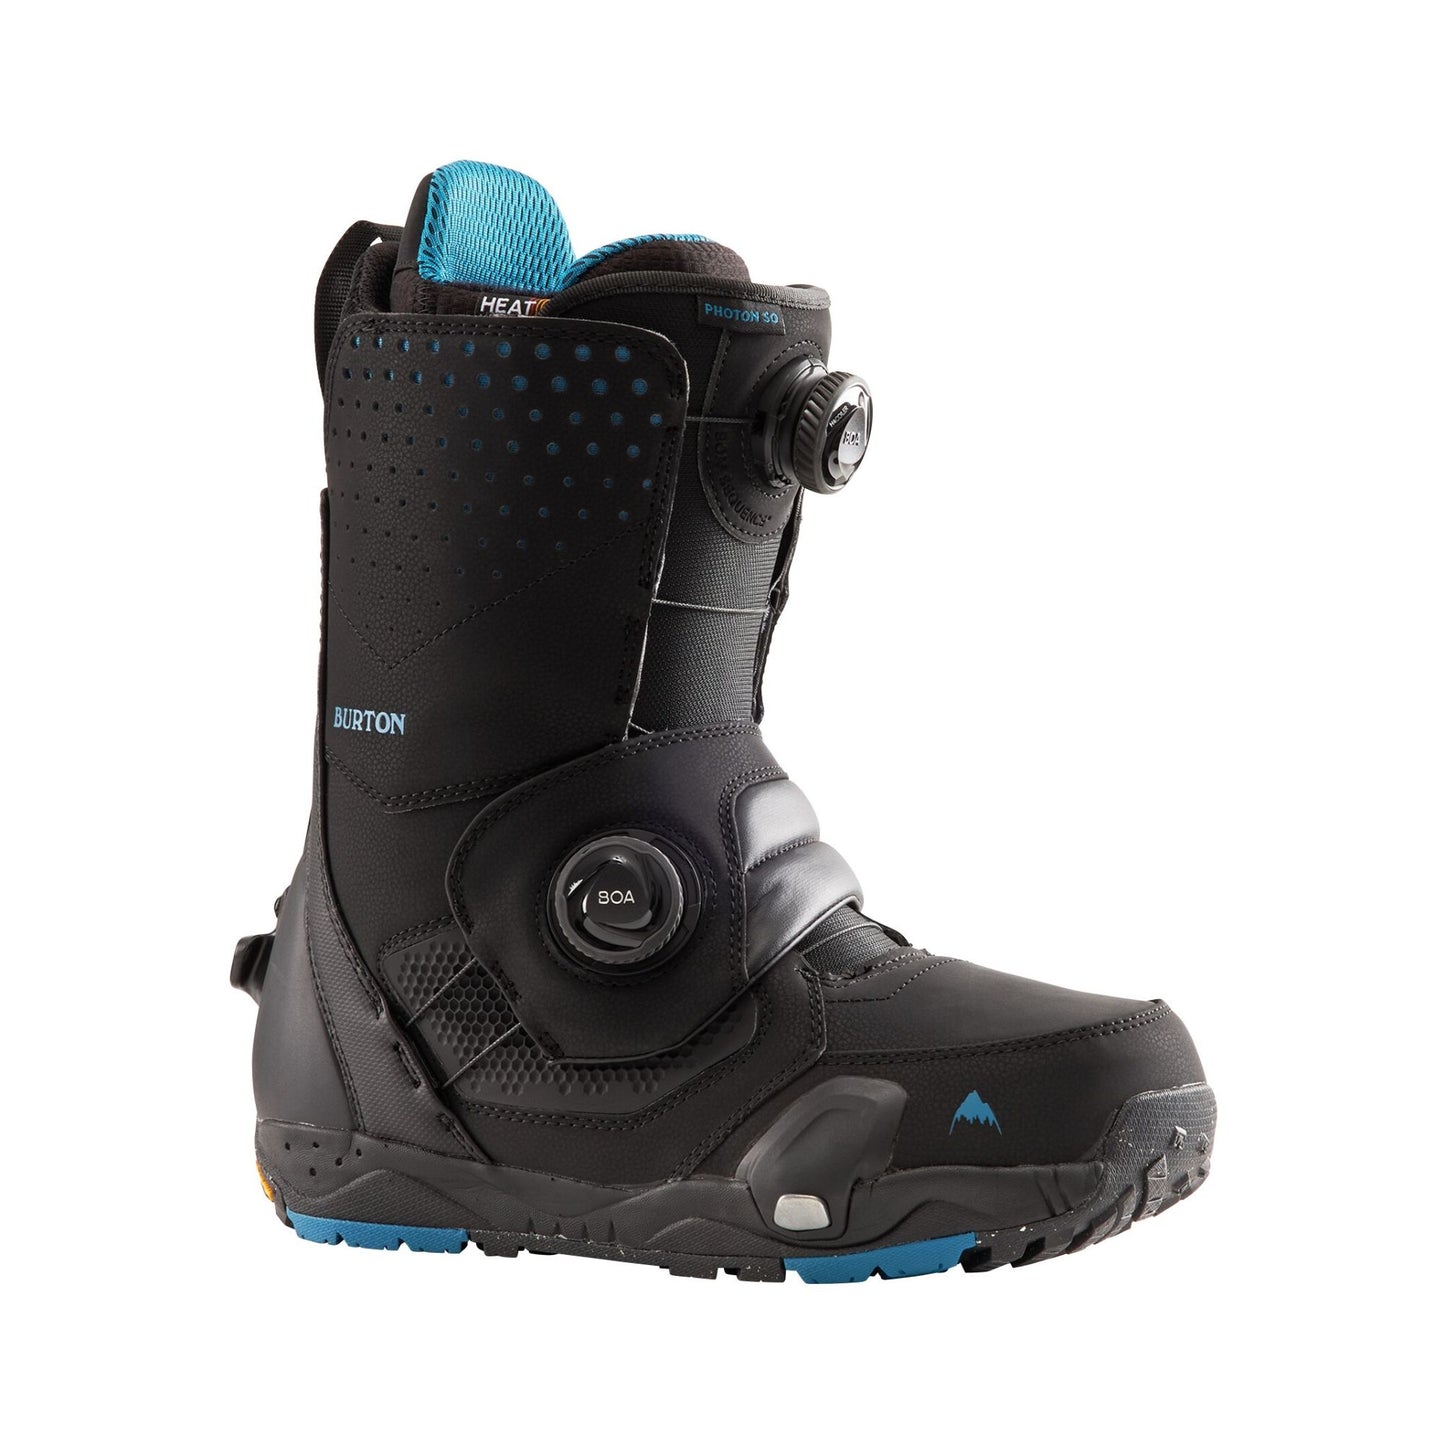 Men's Burton Photon Step On Snowboard Boots - Wide Black Snowboard Boots